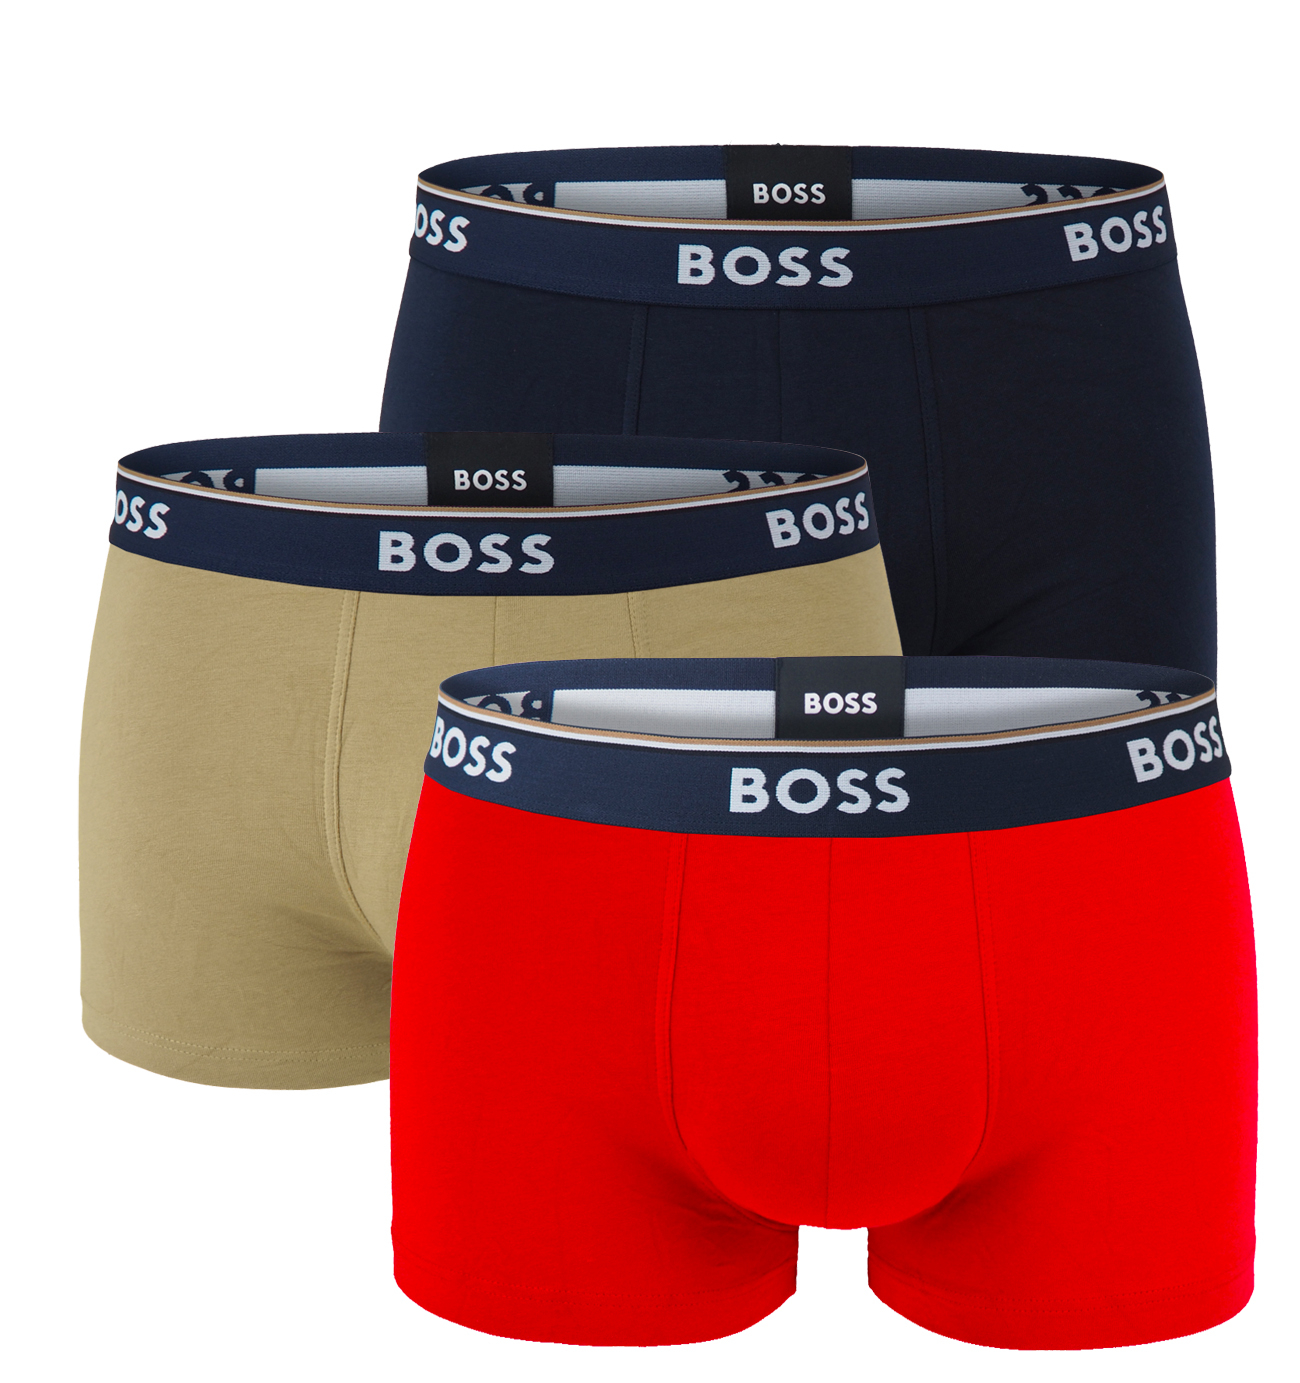 BOSS - boxerky 3PACK cotton stretch army green & red combo - limitovaná fashion edícia (HUGO BOSS)